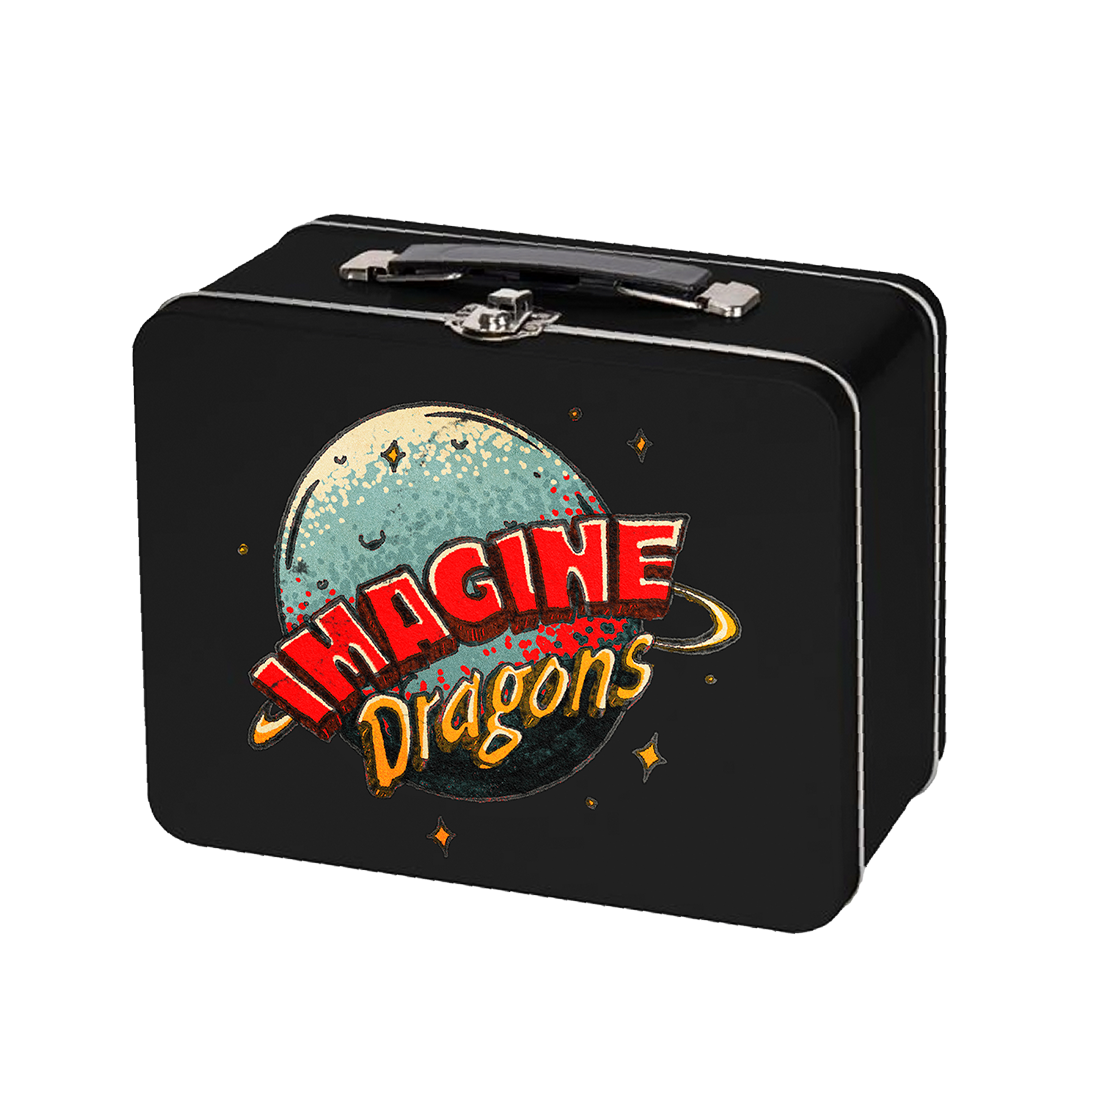 Imagine Dragons - Planet Lunchbox